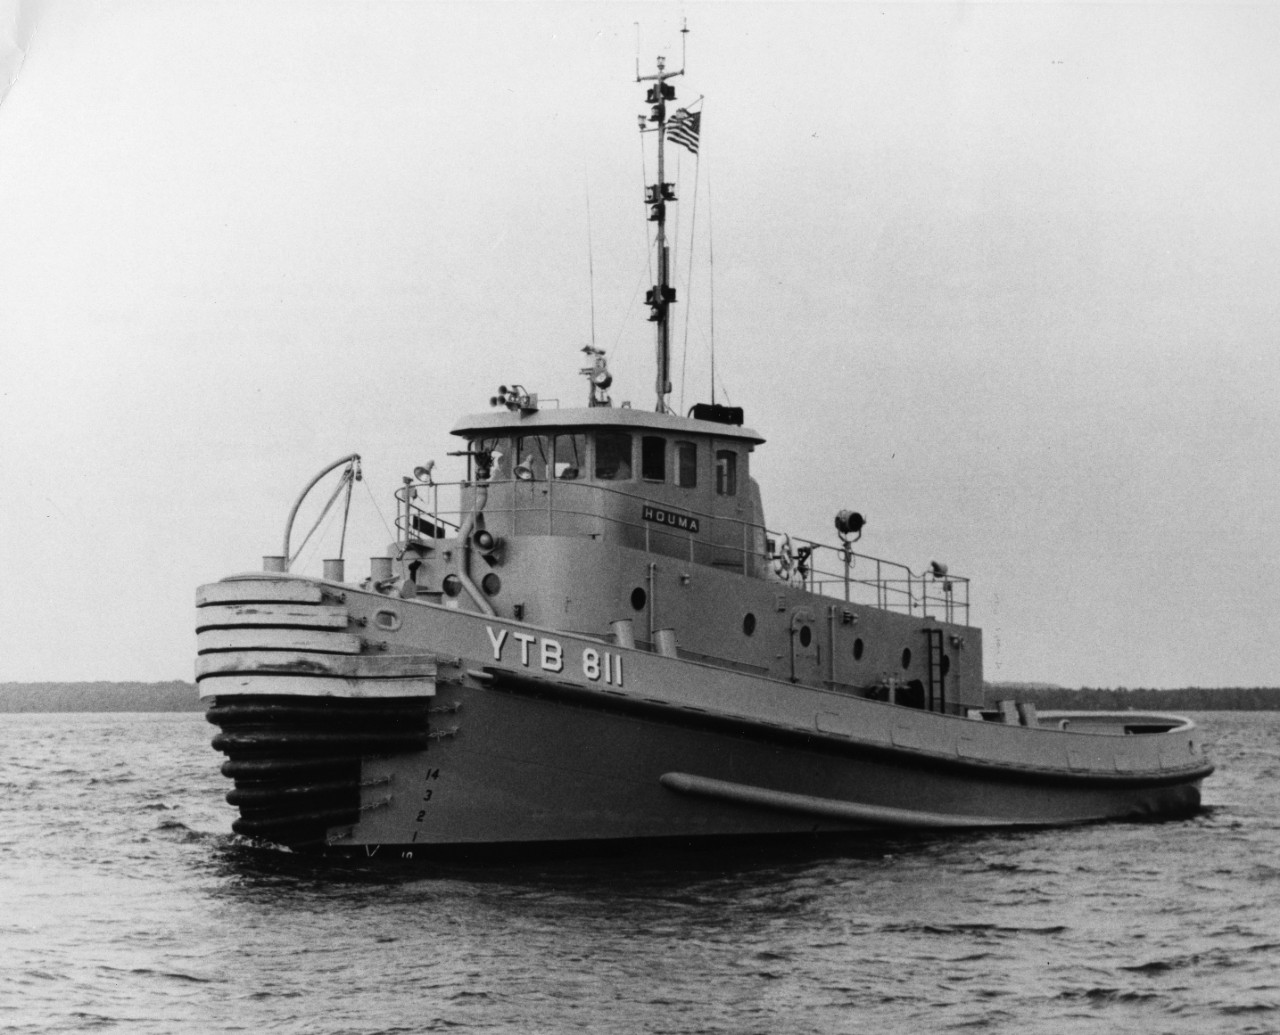 Large harbor tug USS Houma (YTB-811) underway in Sturgeon Bay, Wisconsin